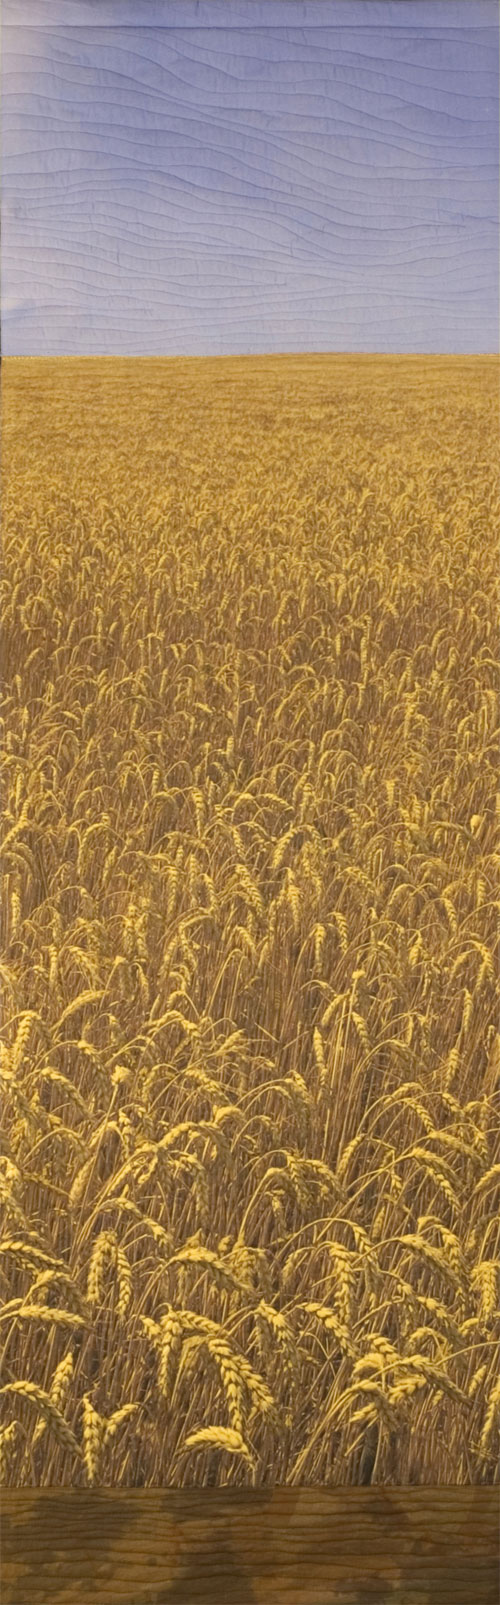 Wheat As Far As the Eye Can See